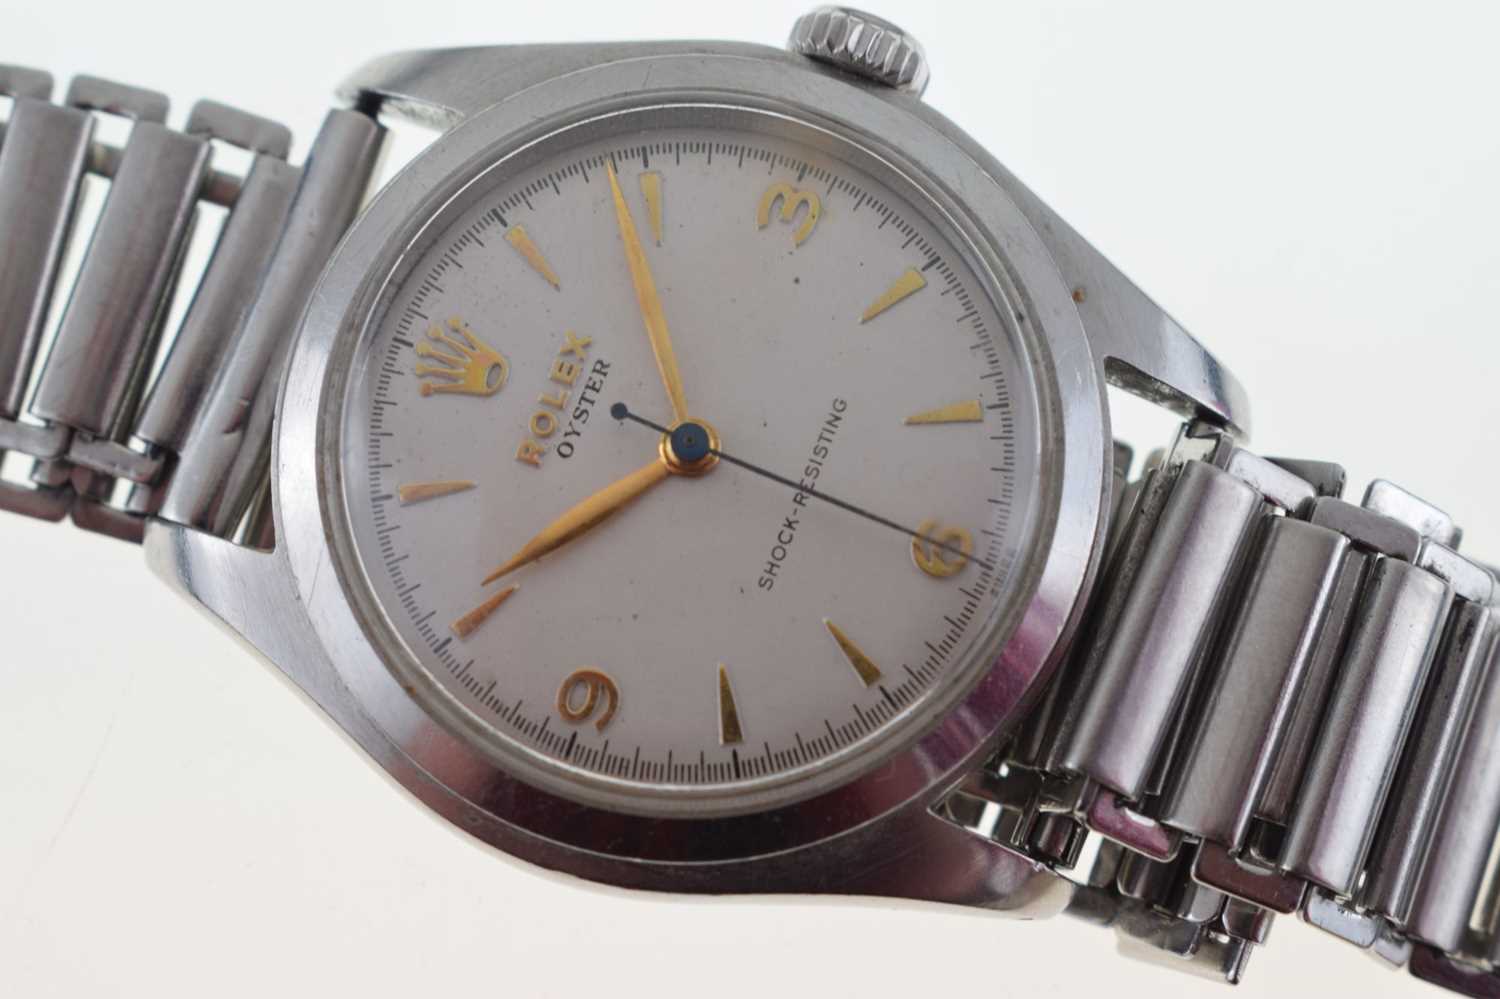 Rolex - Gentleman's Oyster stainless steel wristwatch - Image 7 of 11